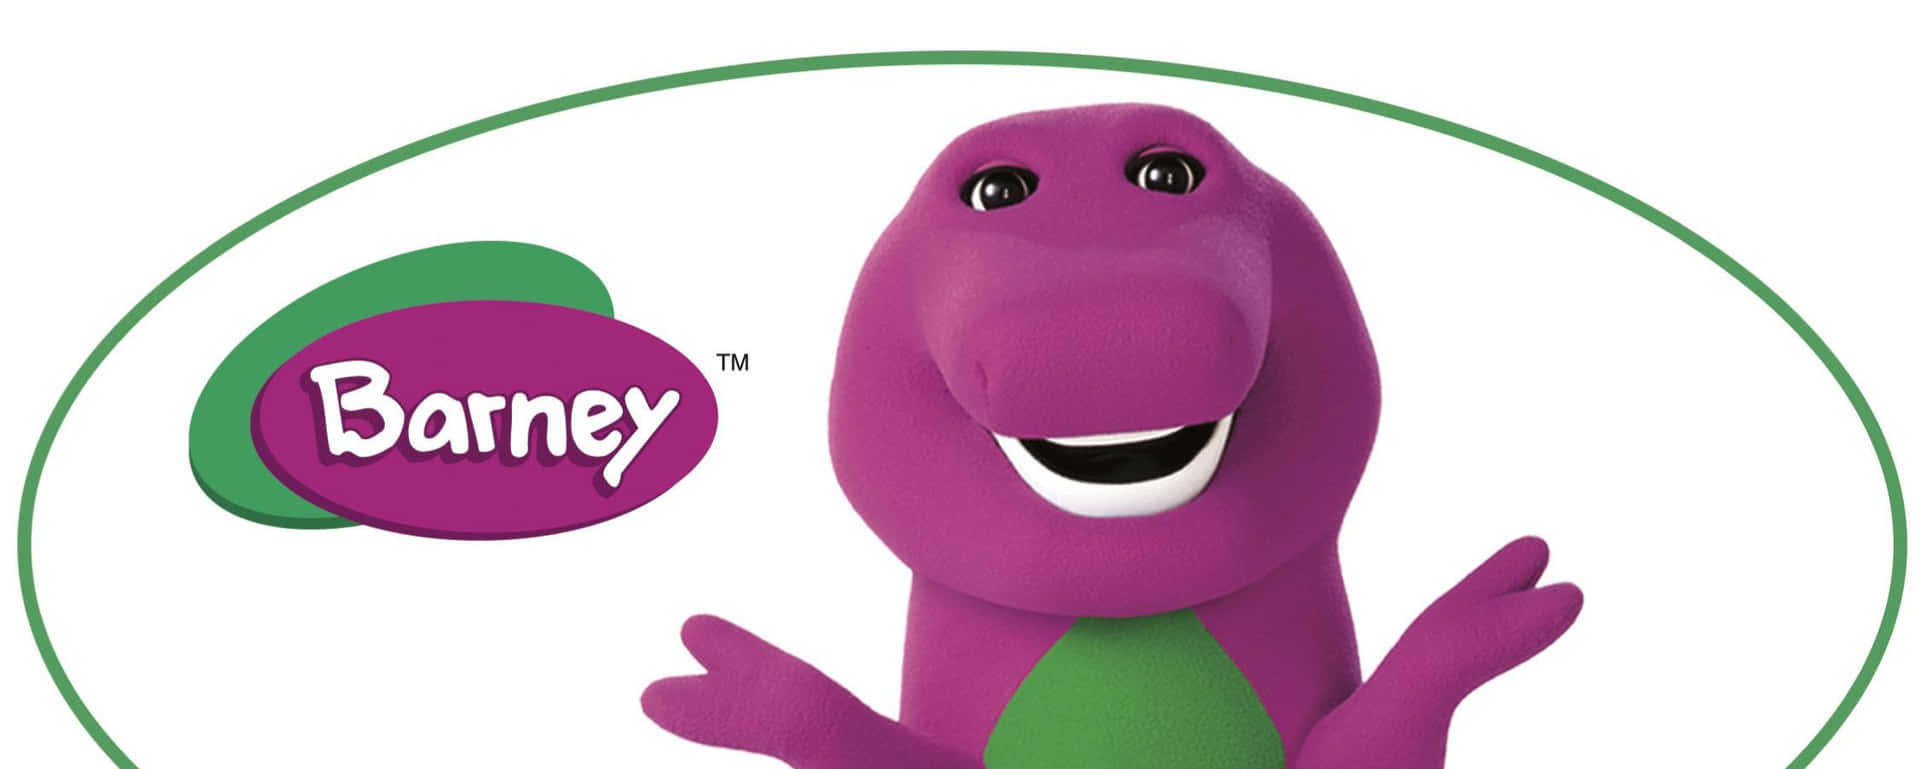 Barney the Friendly Purple Dinosaur Smiling and Waving Wallpaper